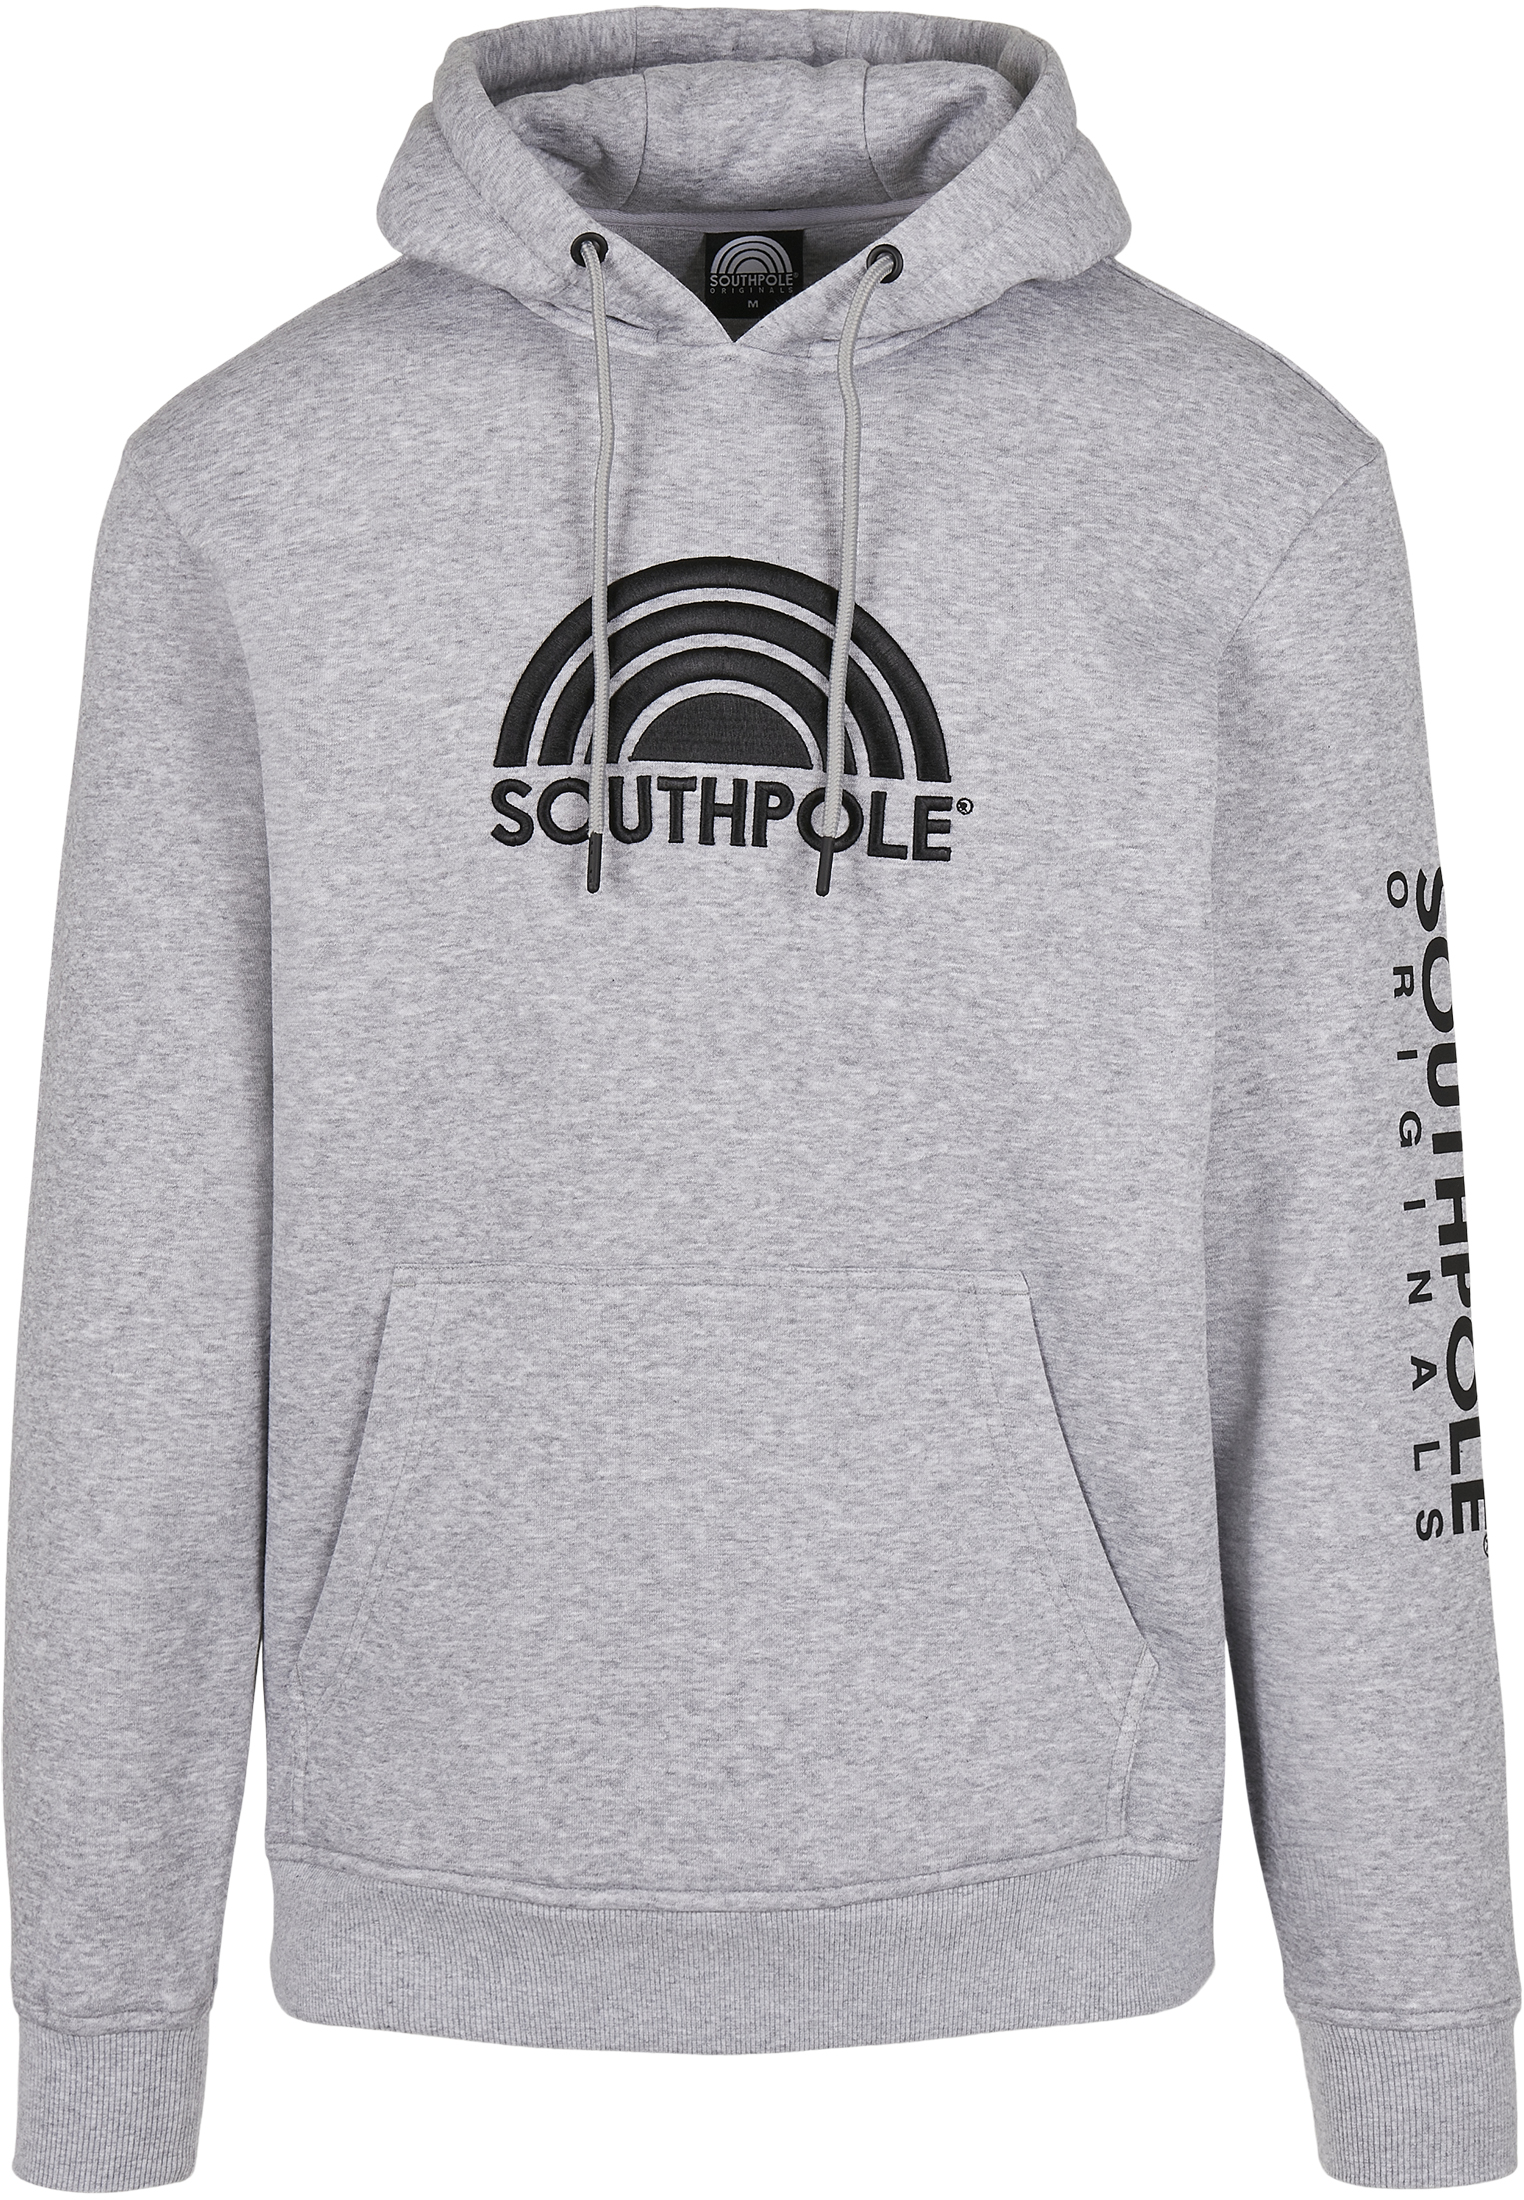 Saisonware Southpole Halfmoon Hoody in Farbe h.grey